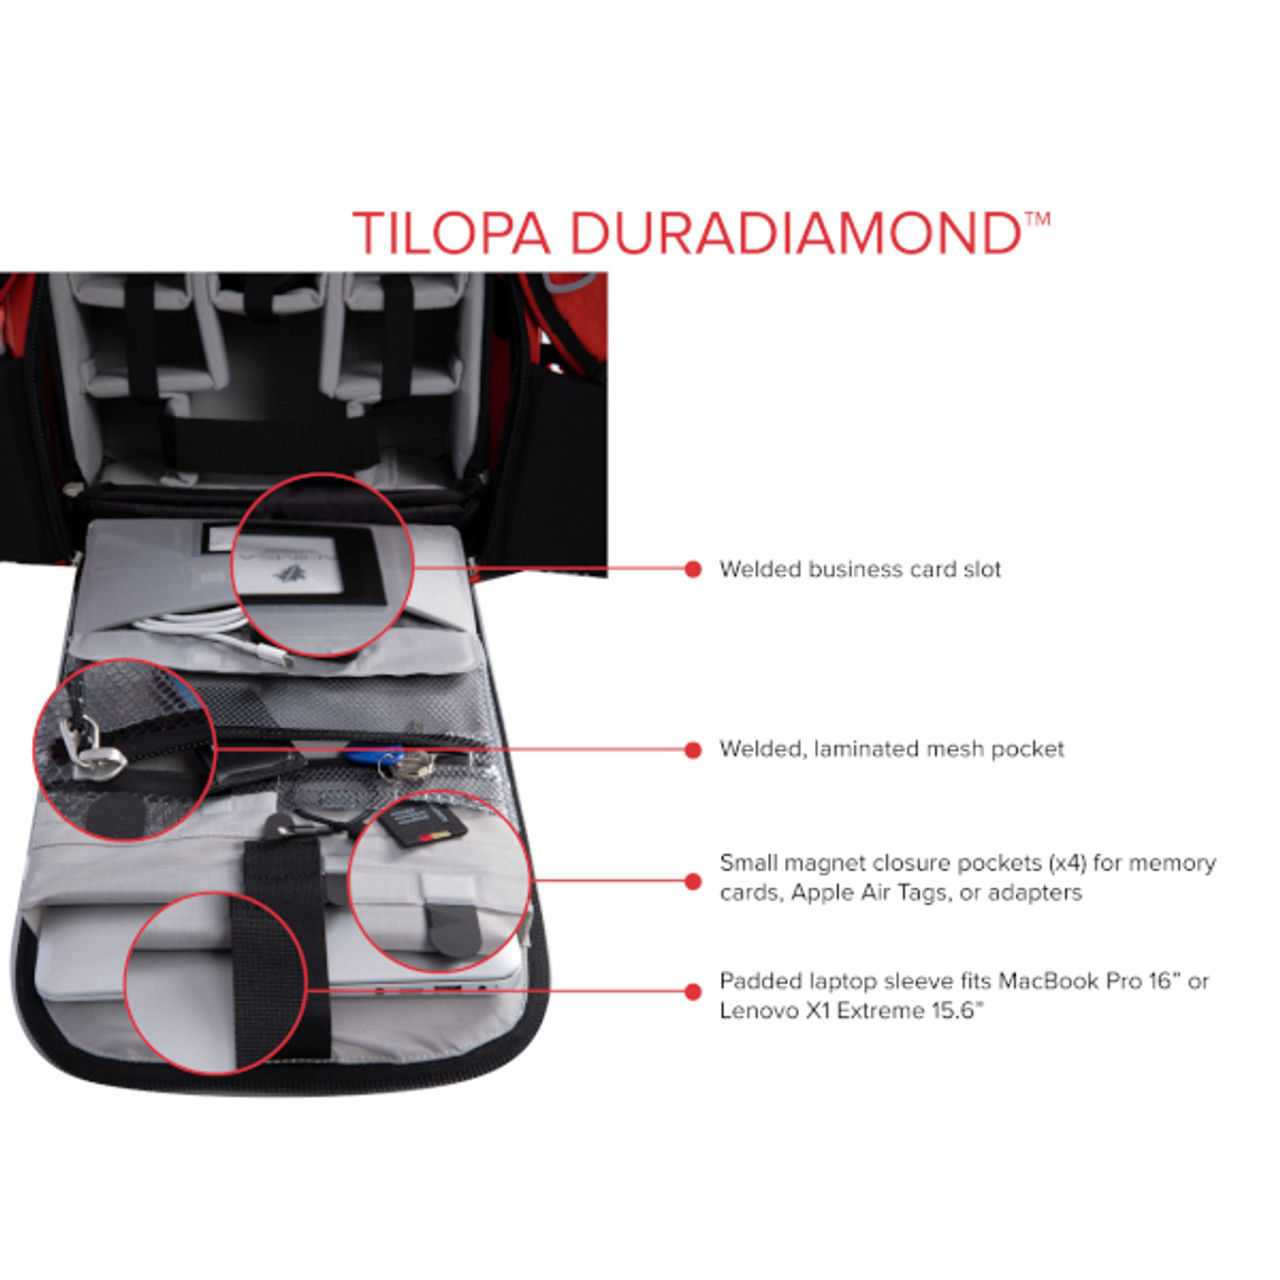 F-stop Tilopa DuraDiamond 50L Essential Bundle Black